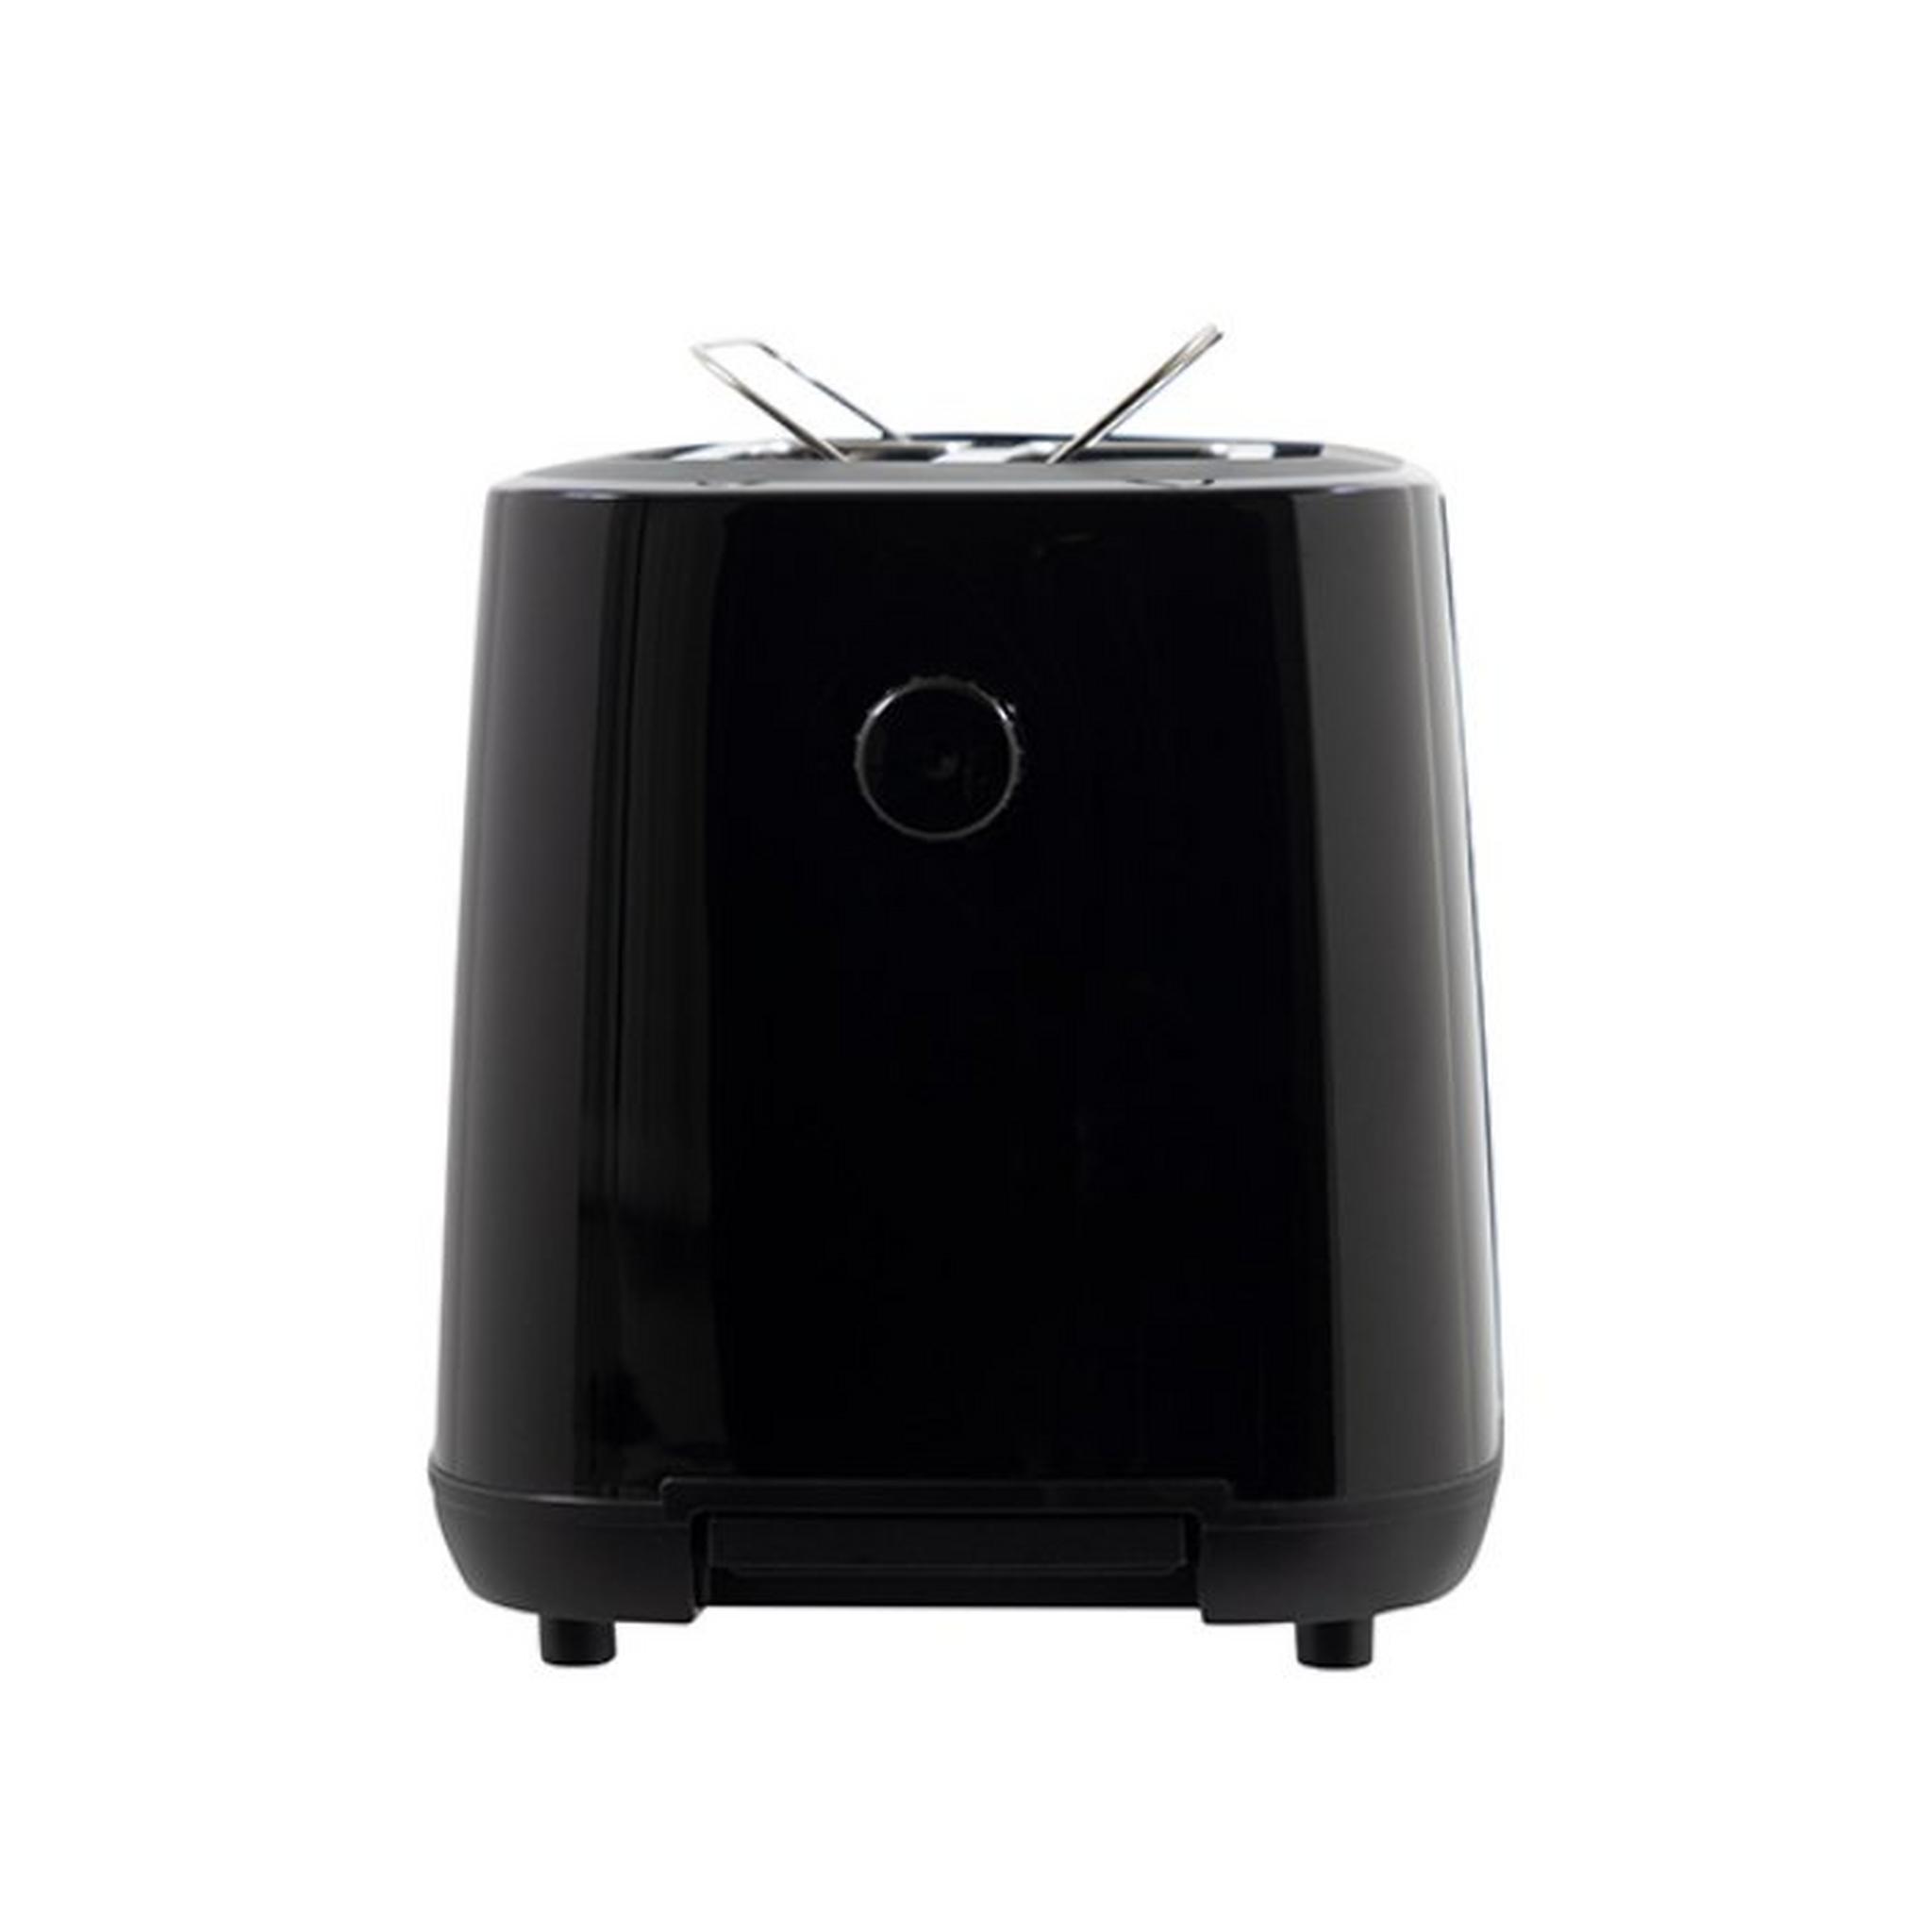 WestingHouse Digital Toaster, 1000W, 2 slices, WKTTLD7051 – Black